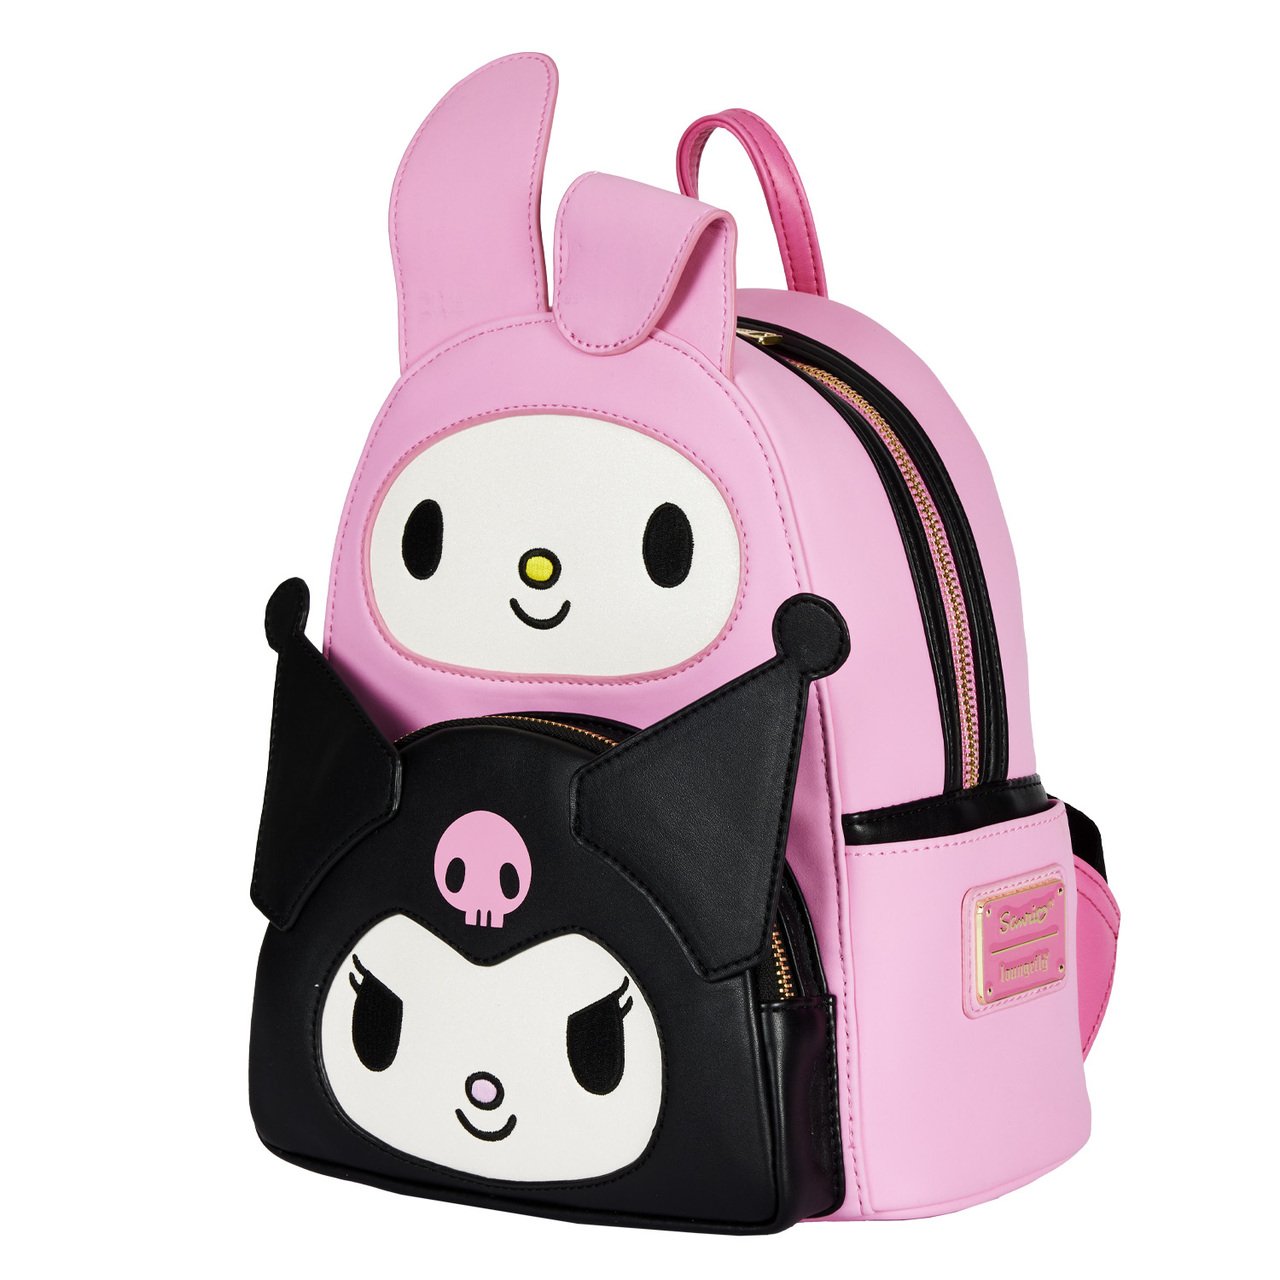 Kuromi x Loungefly Mini Backpack